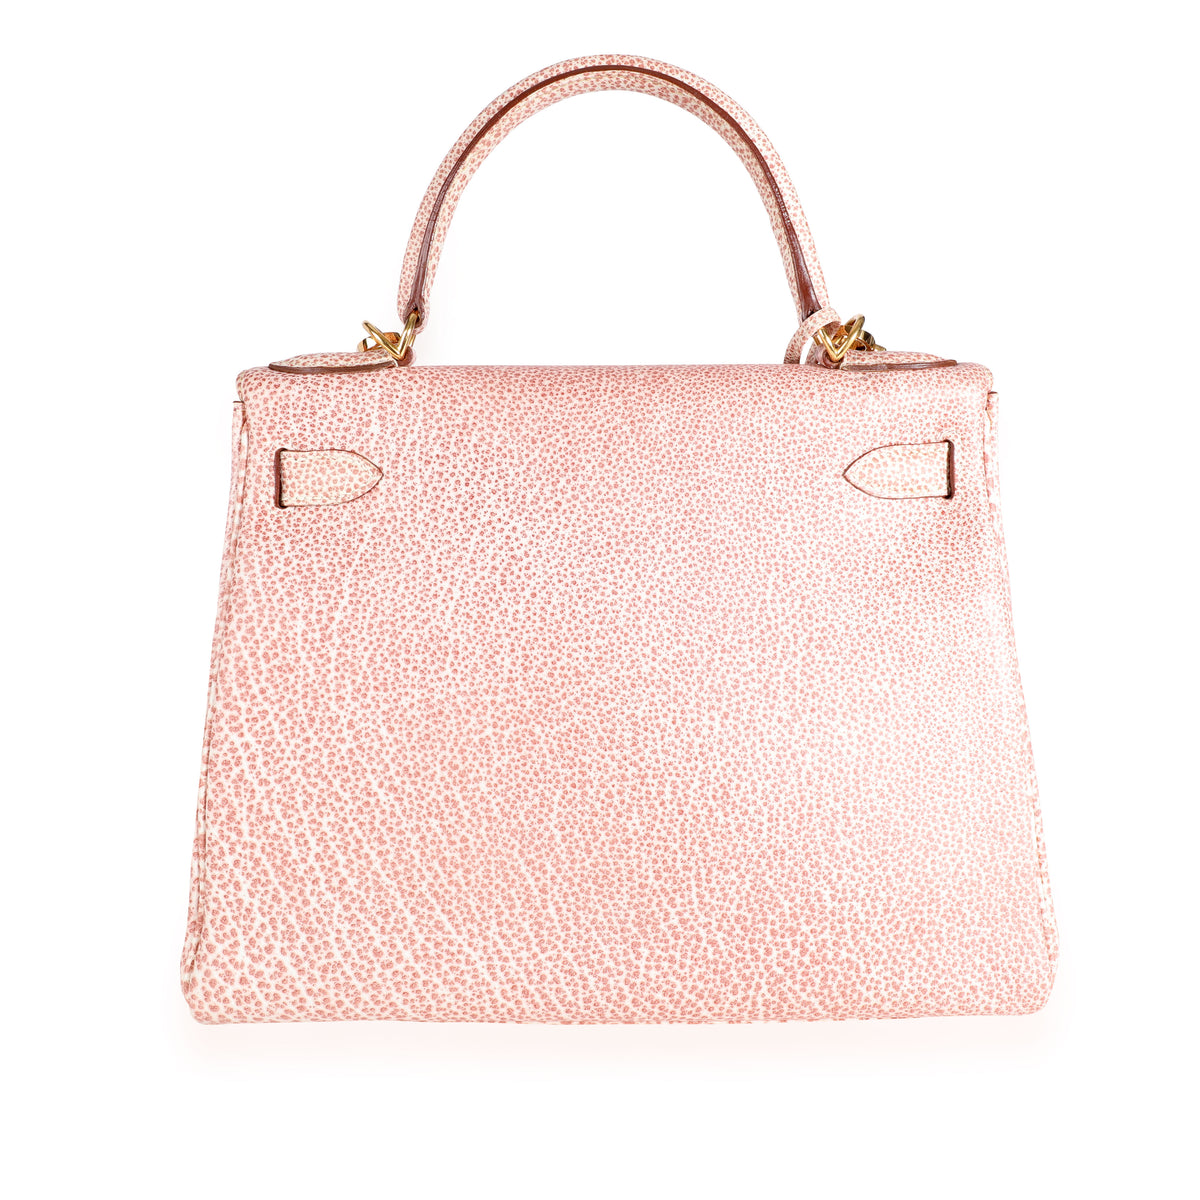 Louis Vuitton Authenticated Dalmatian Handbag